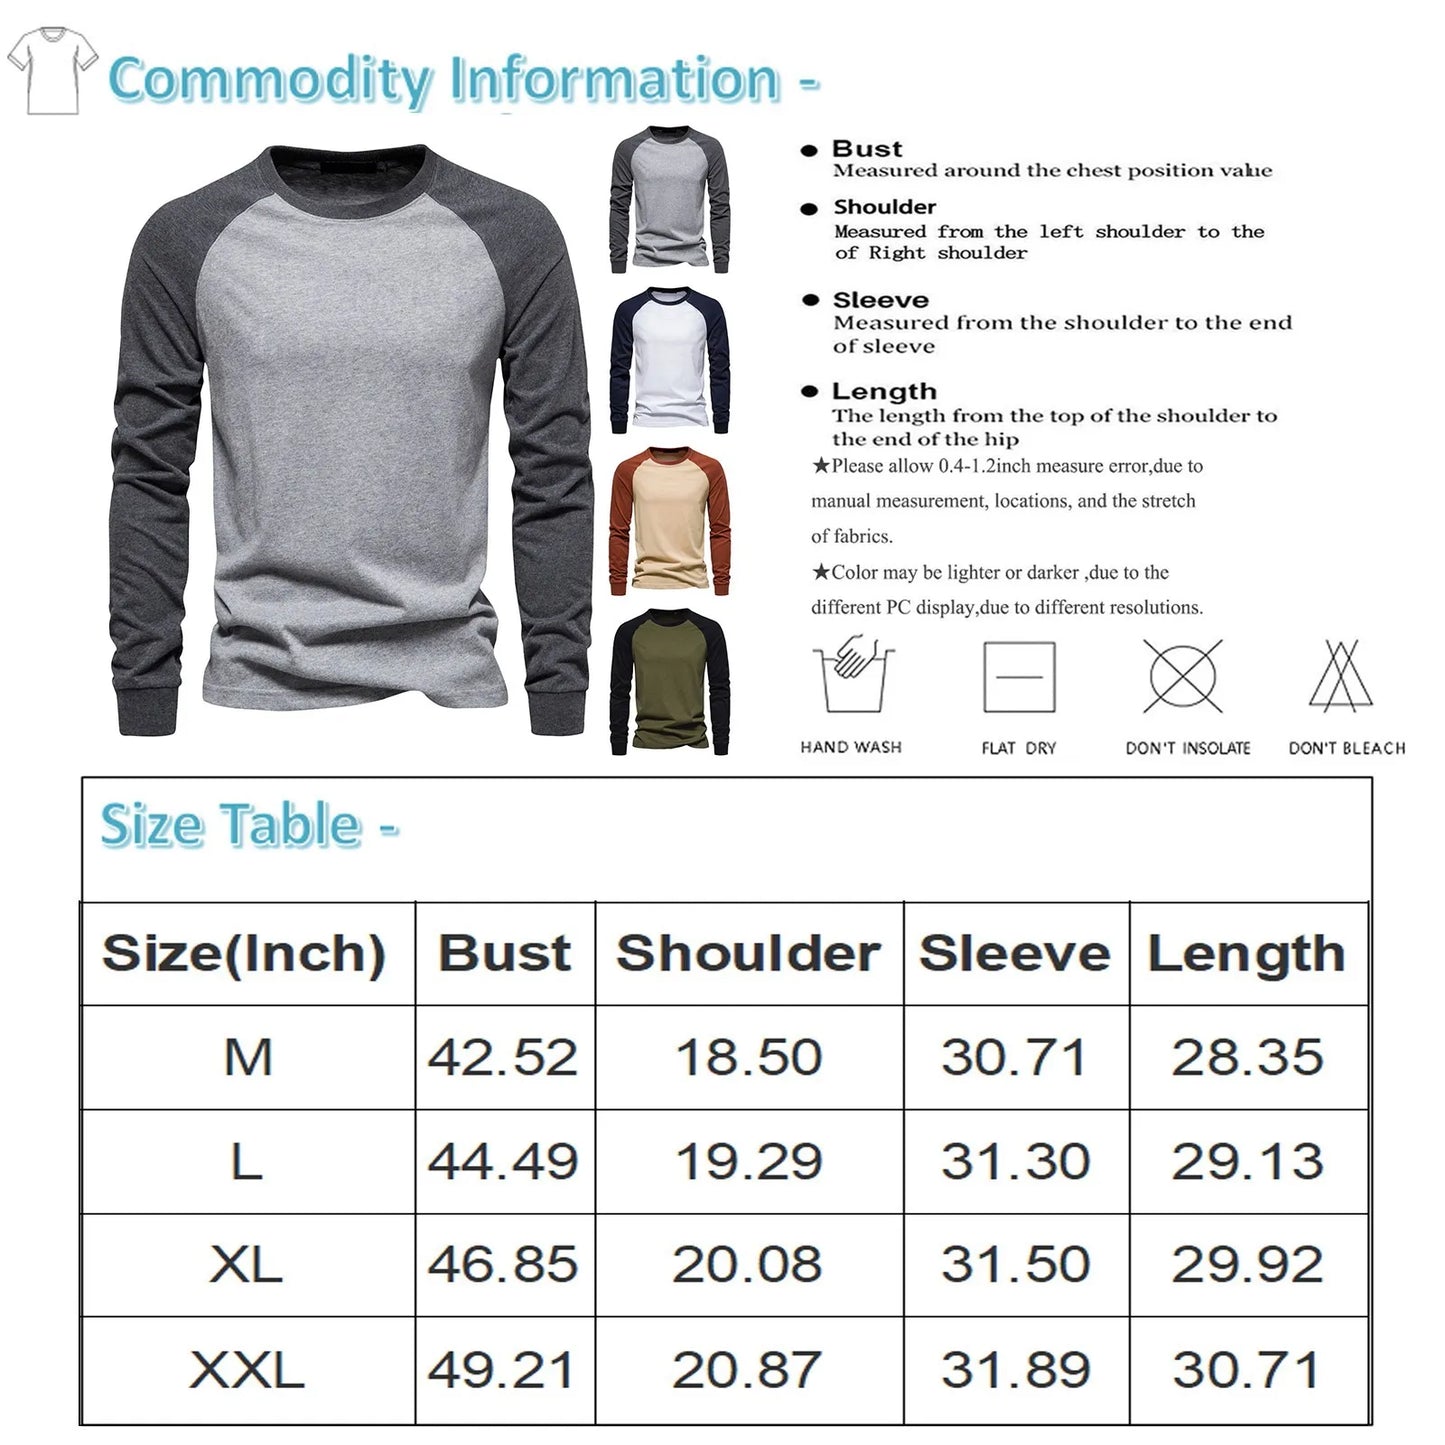 Men's Round Neck T-shirts Raglan Sleeve/Color Matching Long Sleeve Shirt Men's long sleeved